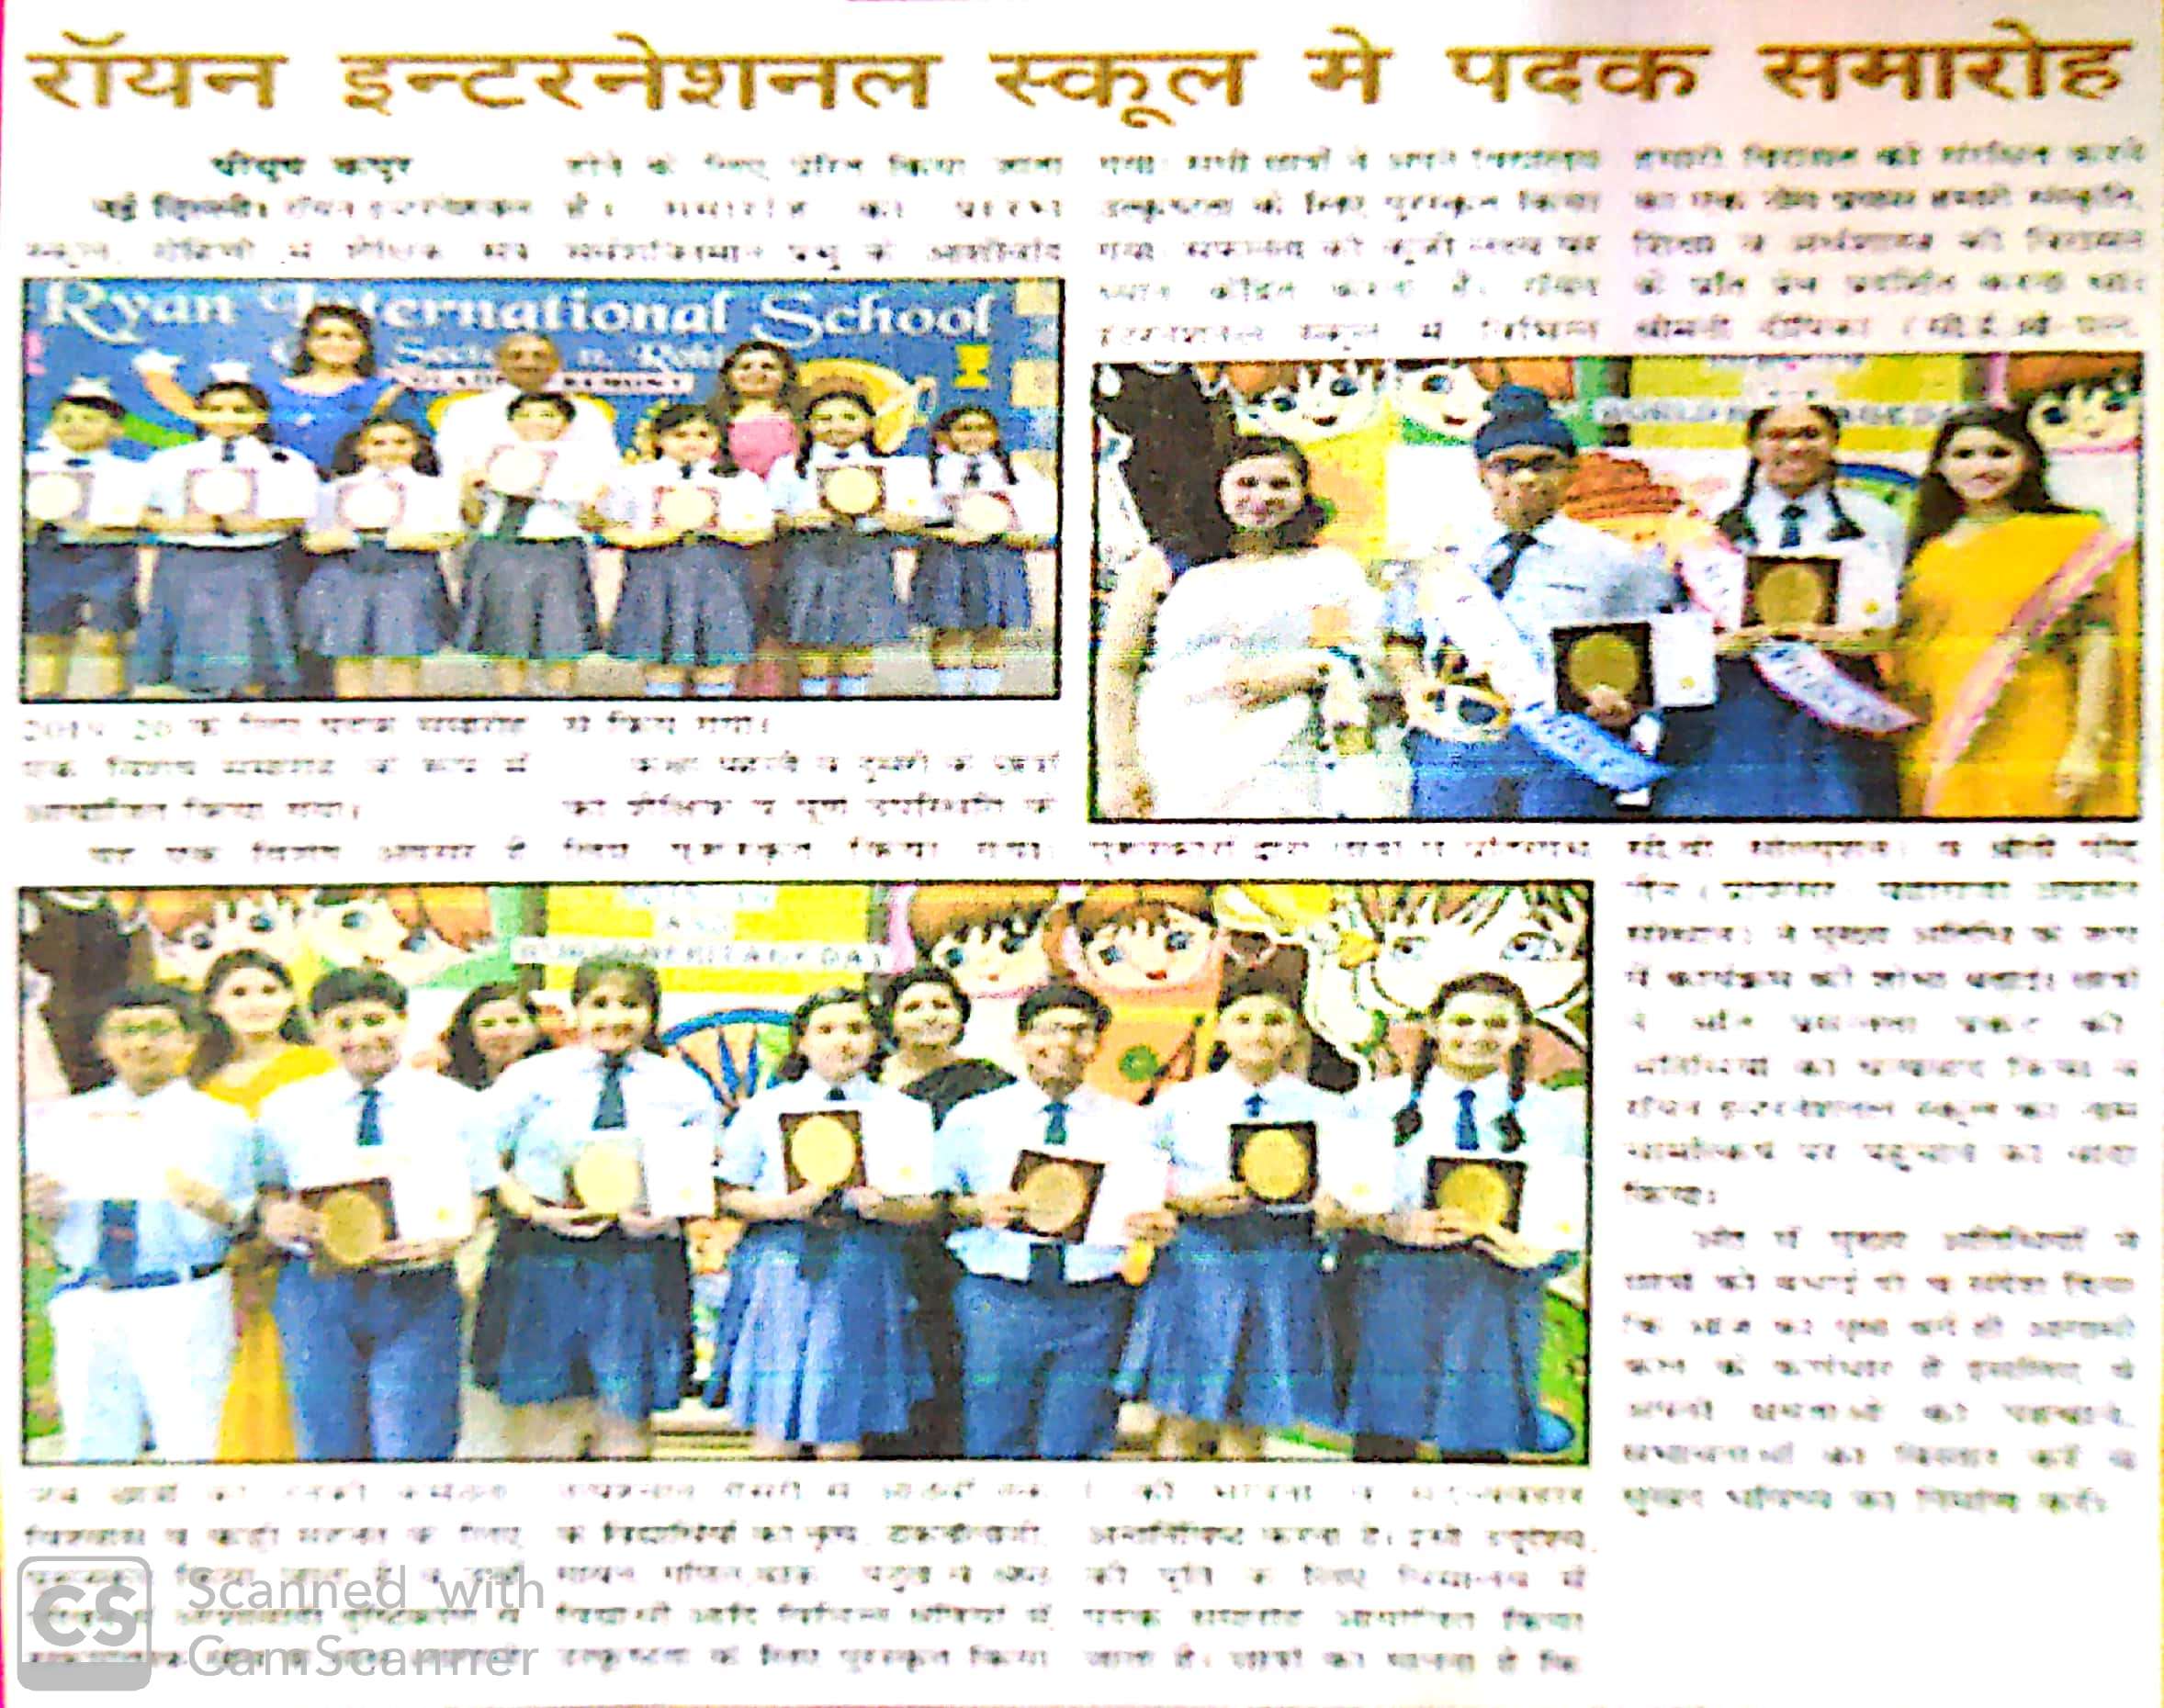 'Ryan International School’s Accolade Ceremony’ - Public News - Ryan International School, Rohini Sec 11, H3